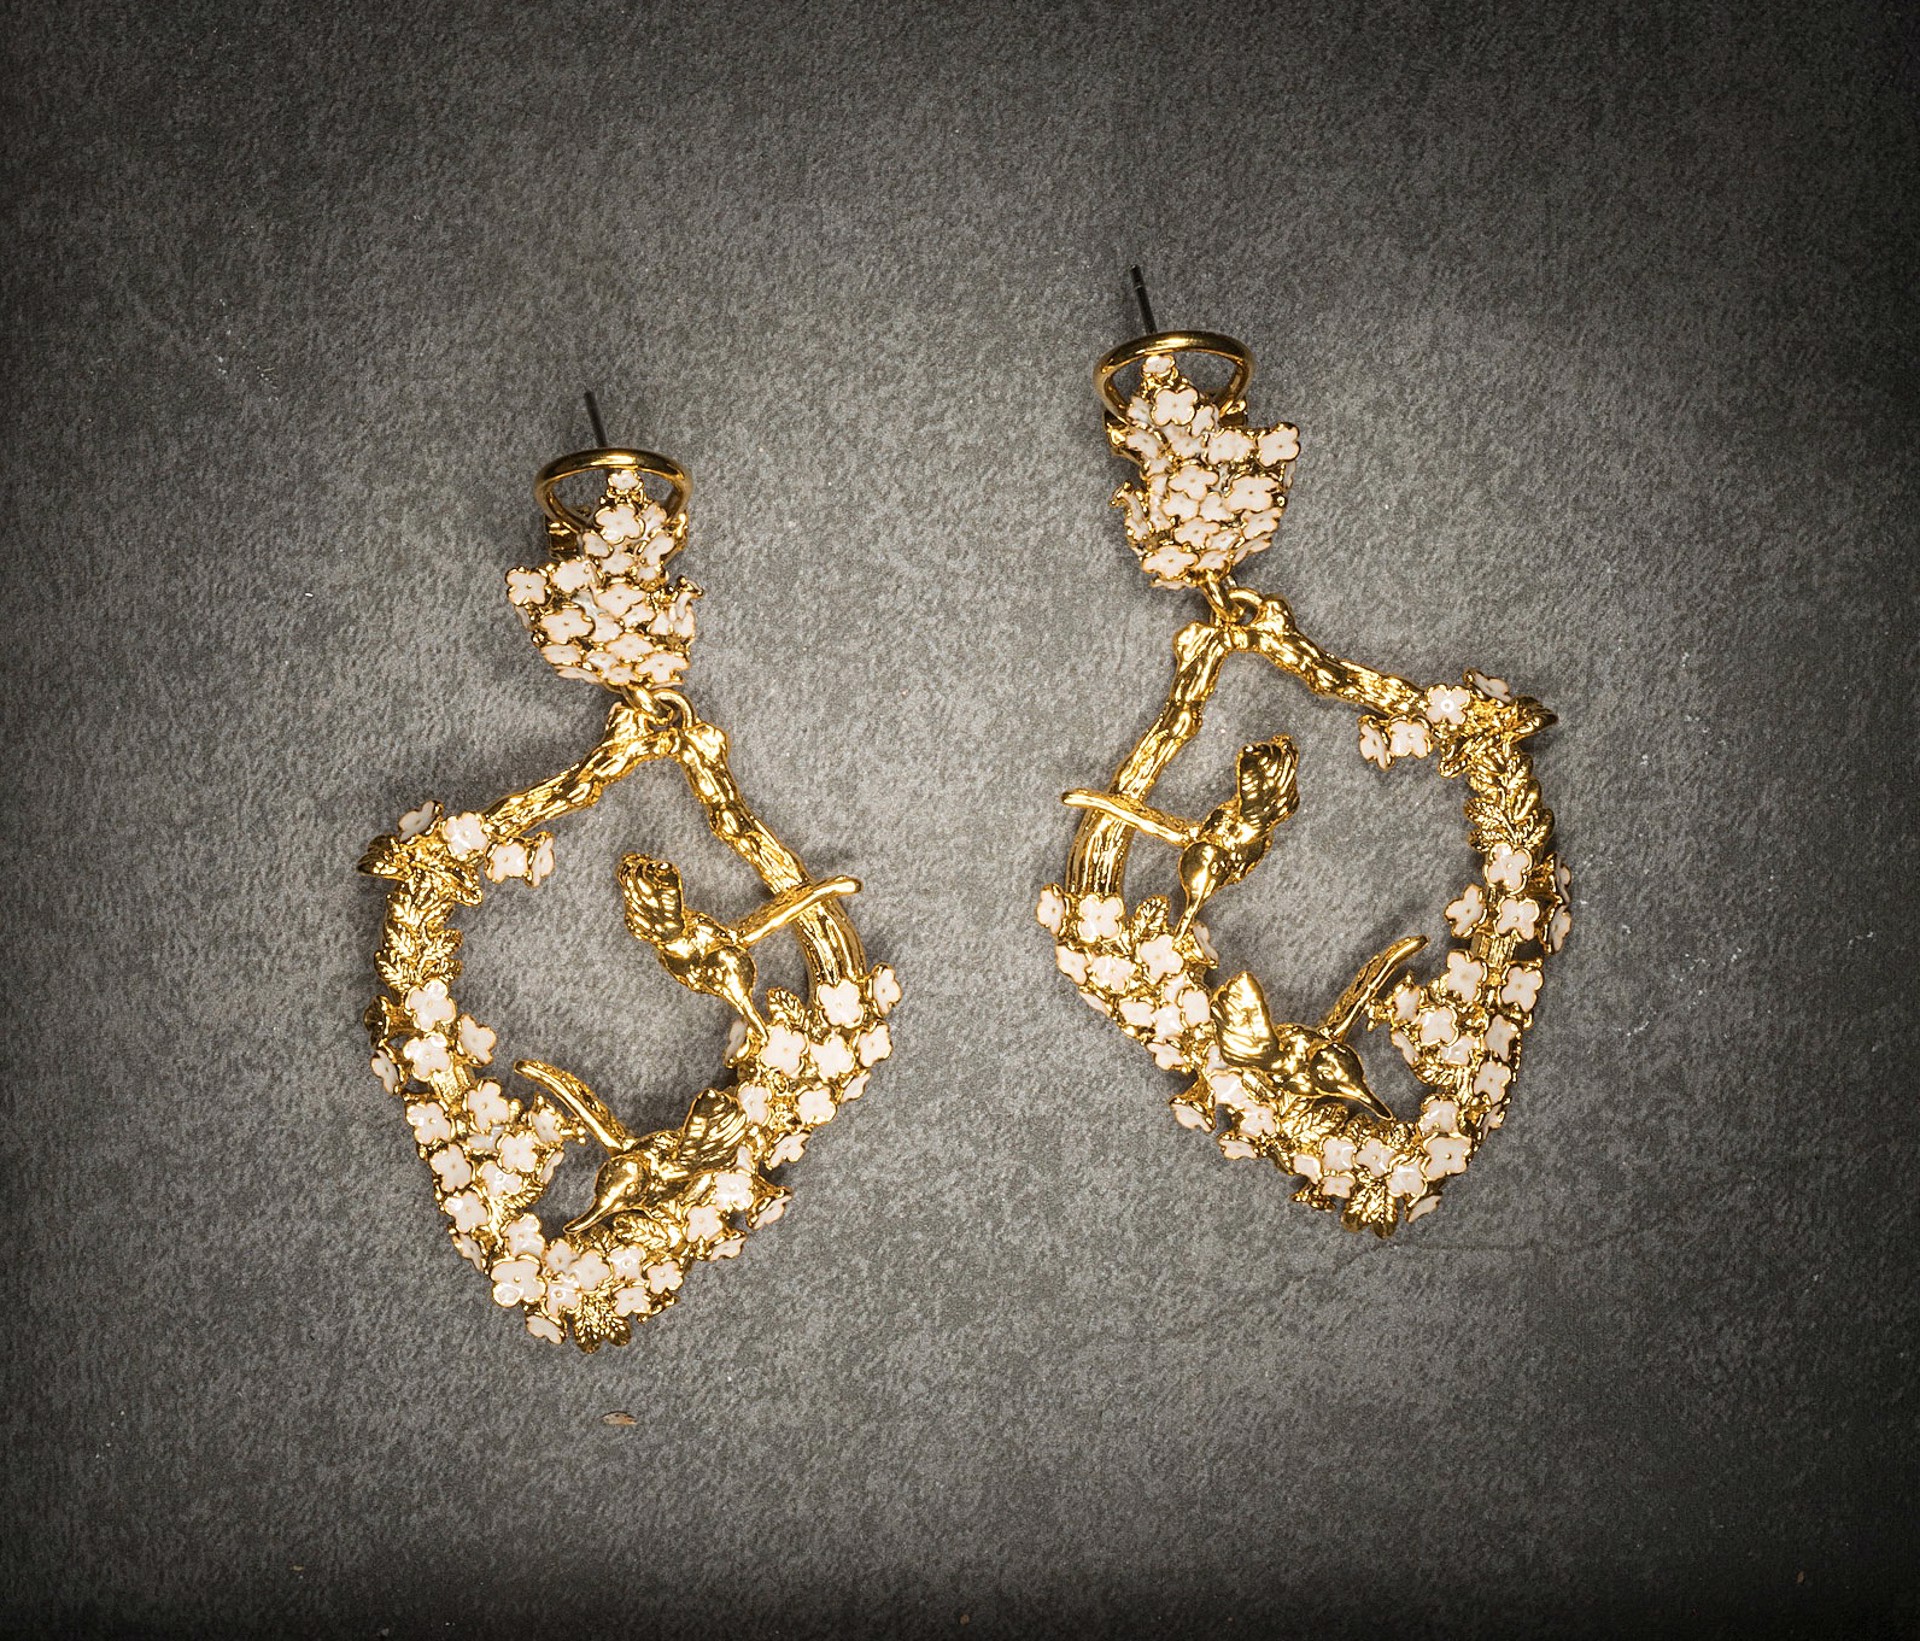 Harmony Earrings - Gold and Ivory by Angela Mia